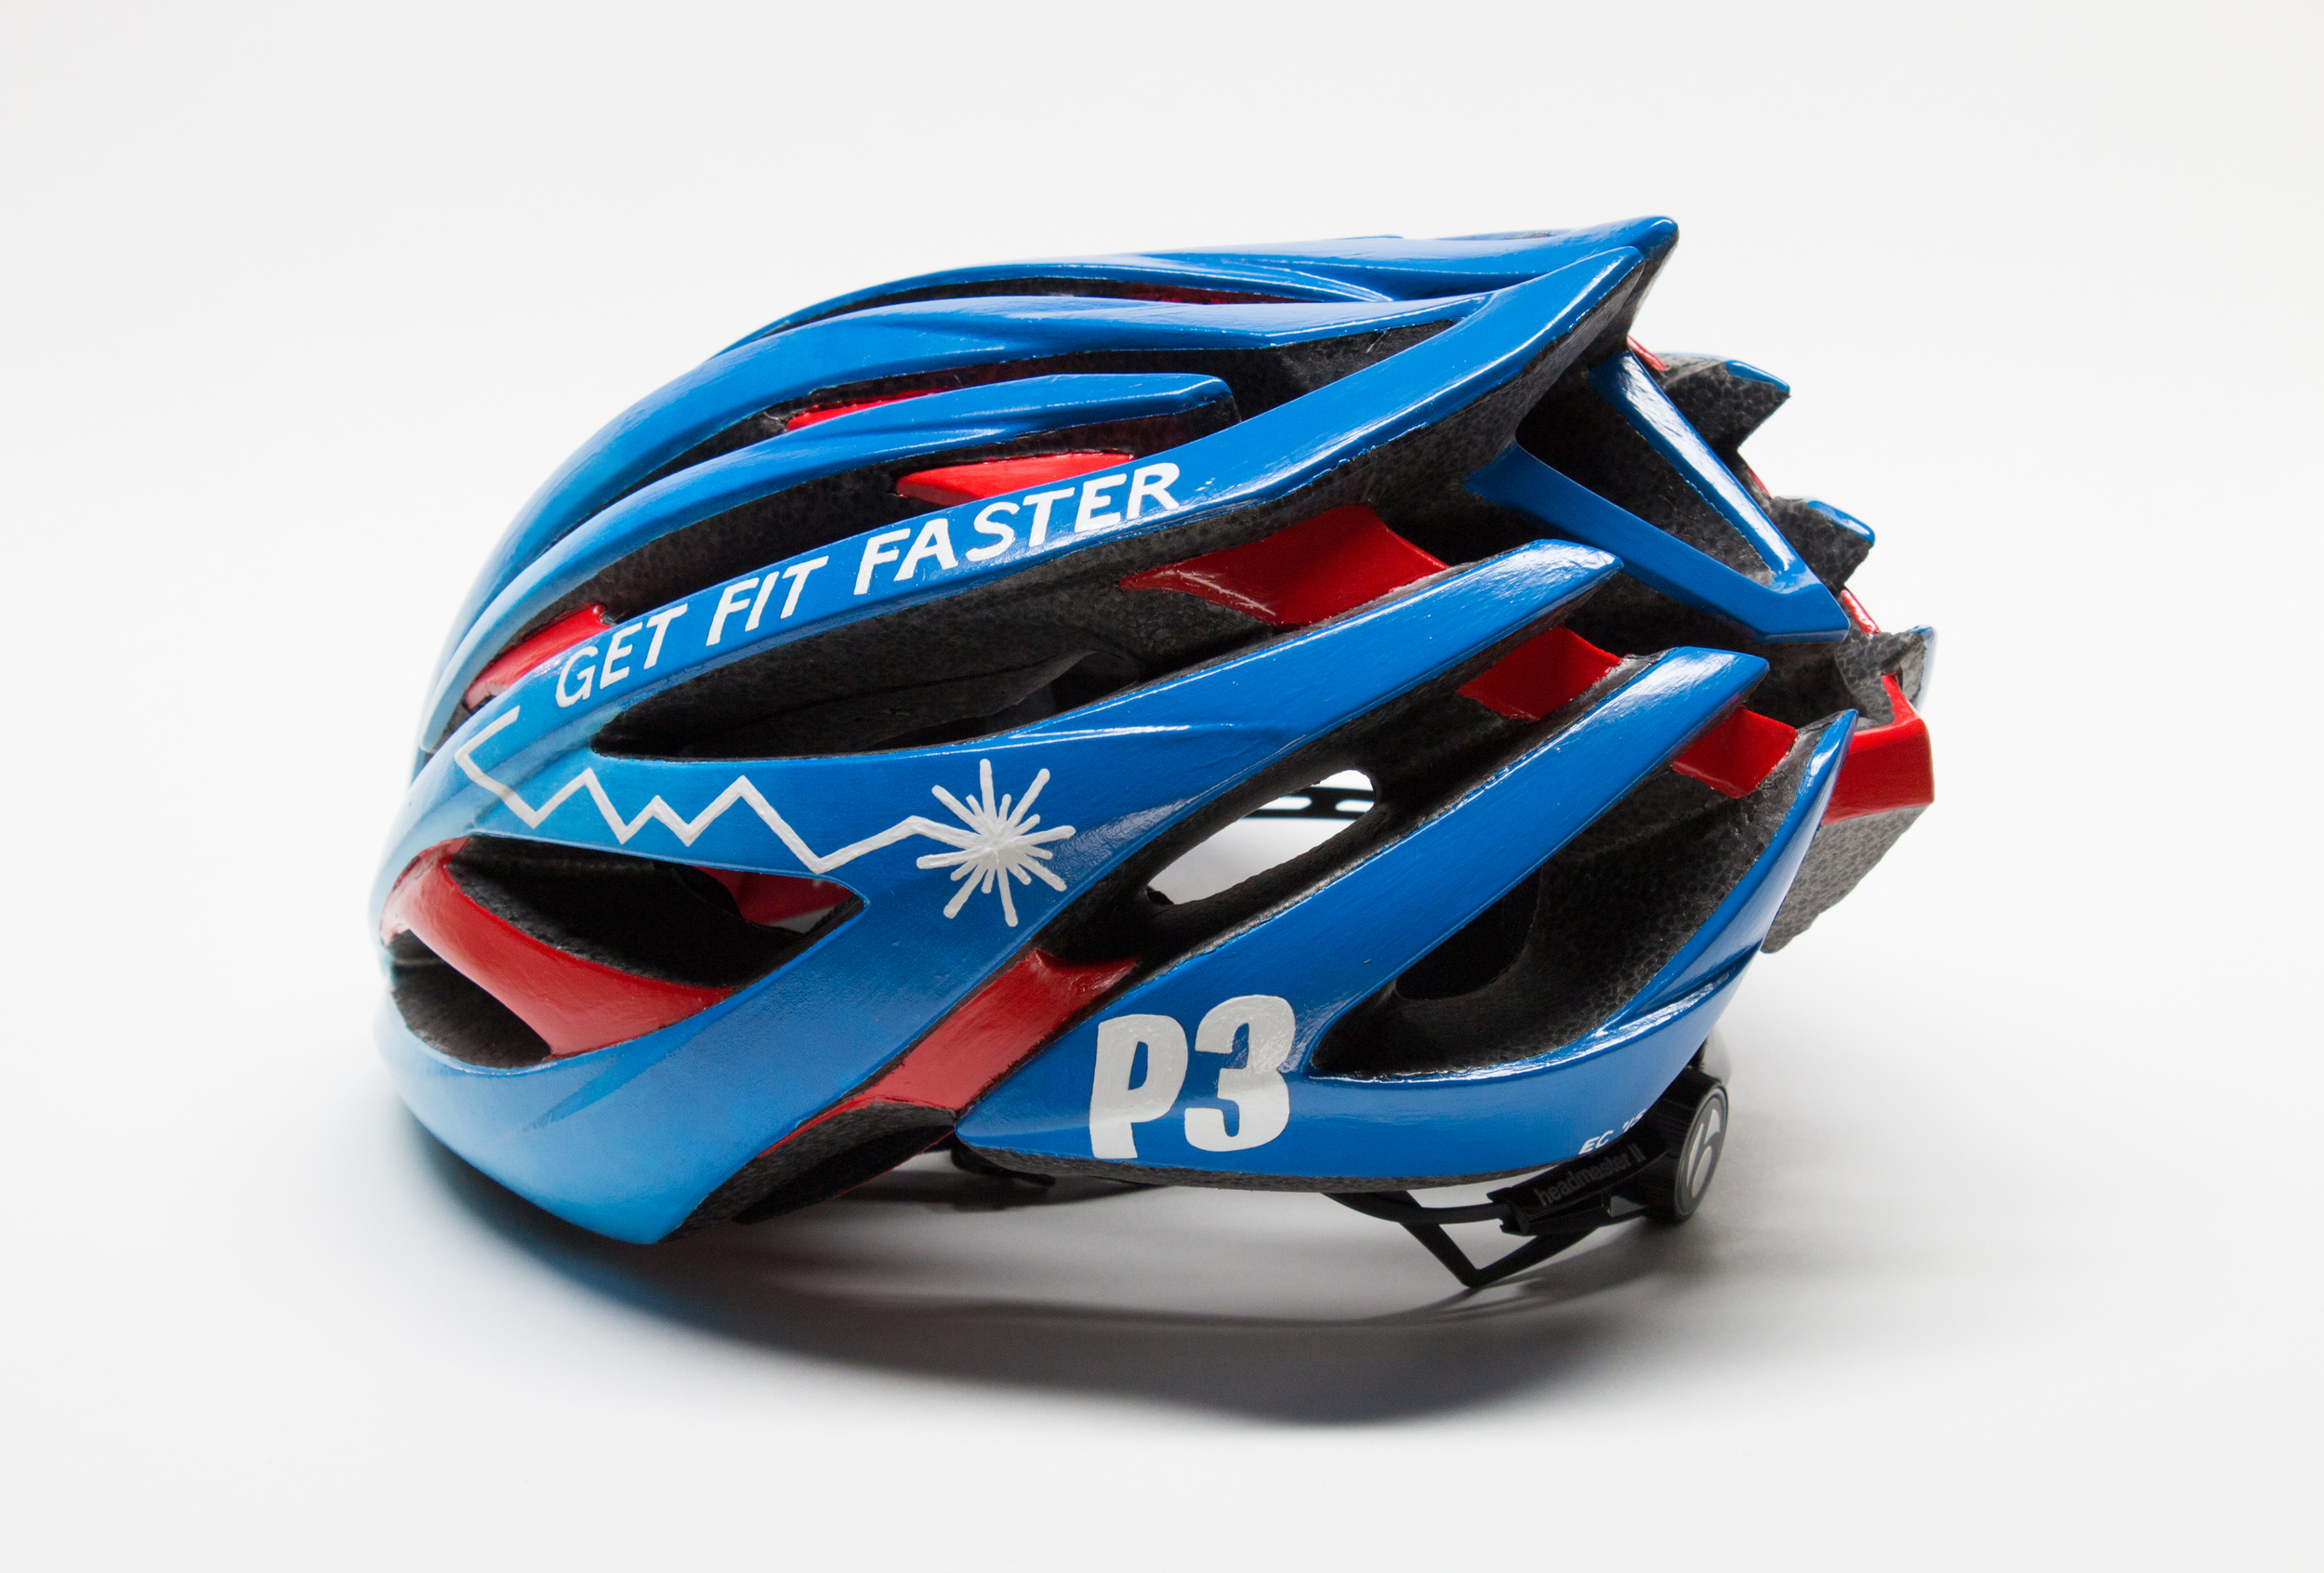 P3 Triathlon Helmet